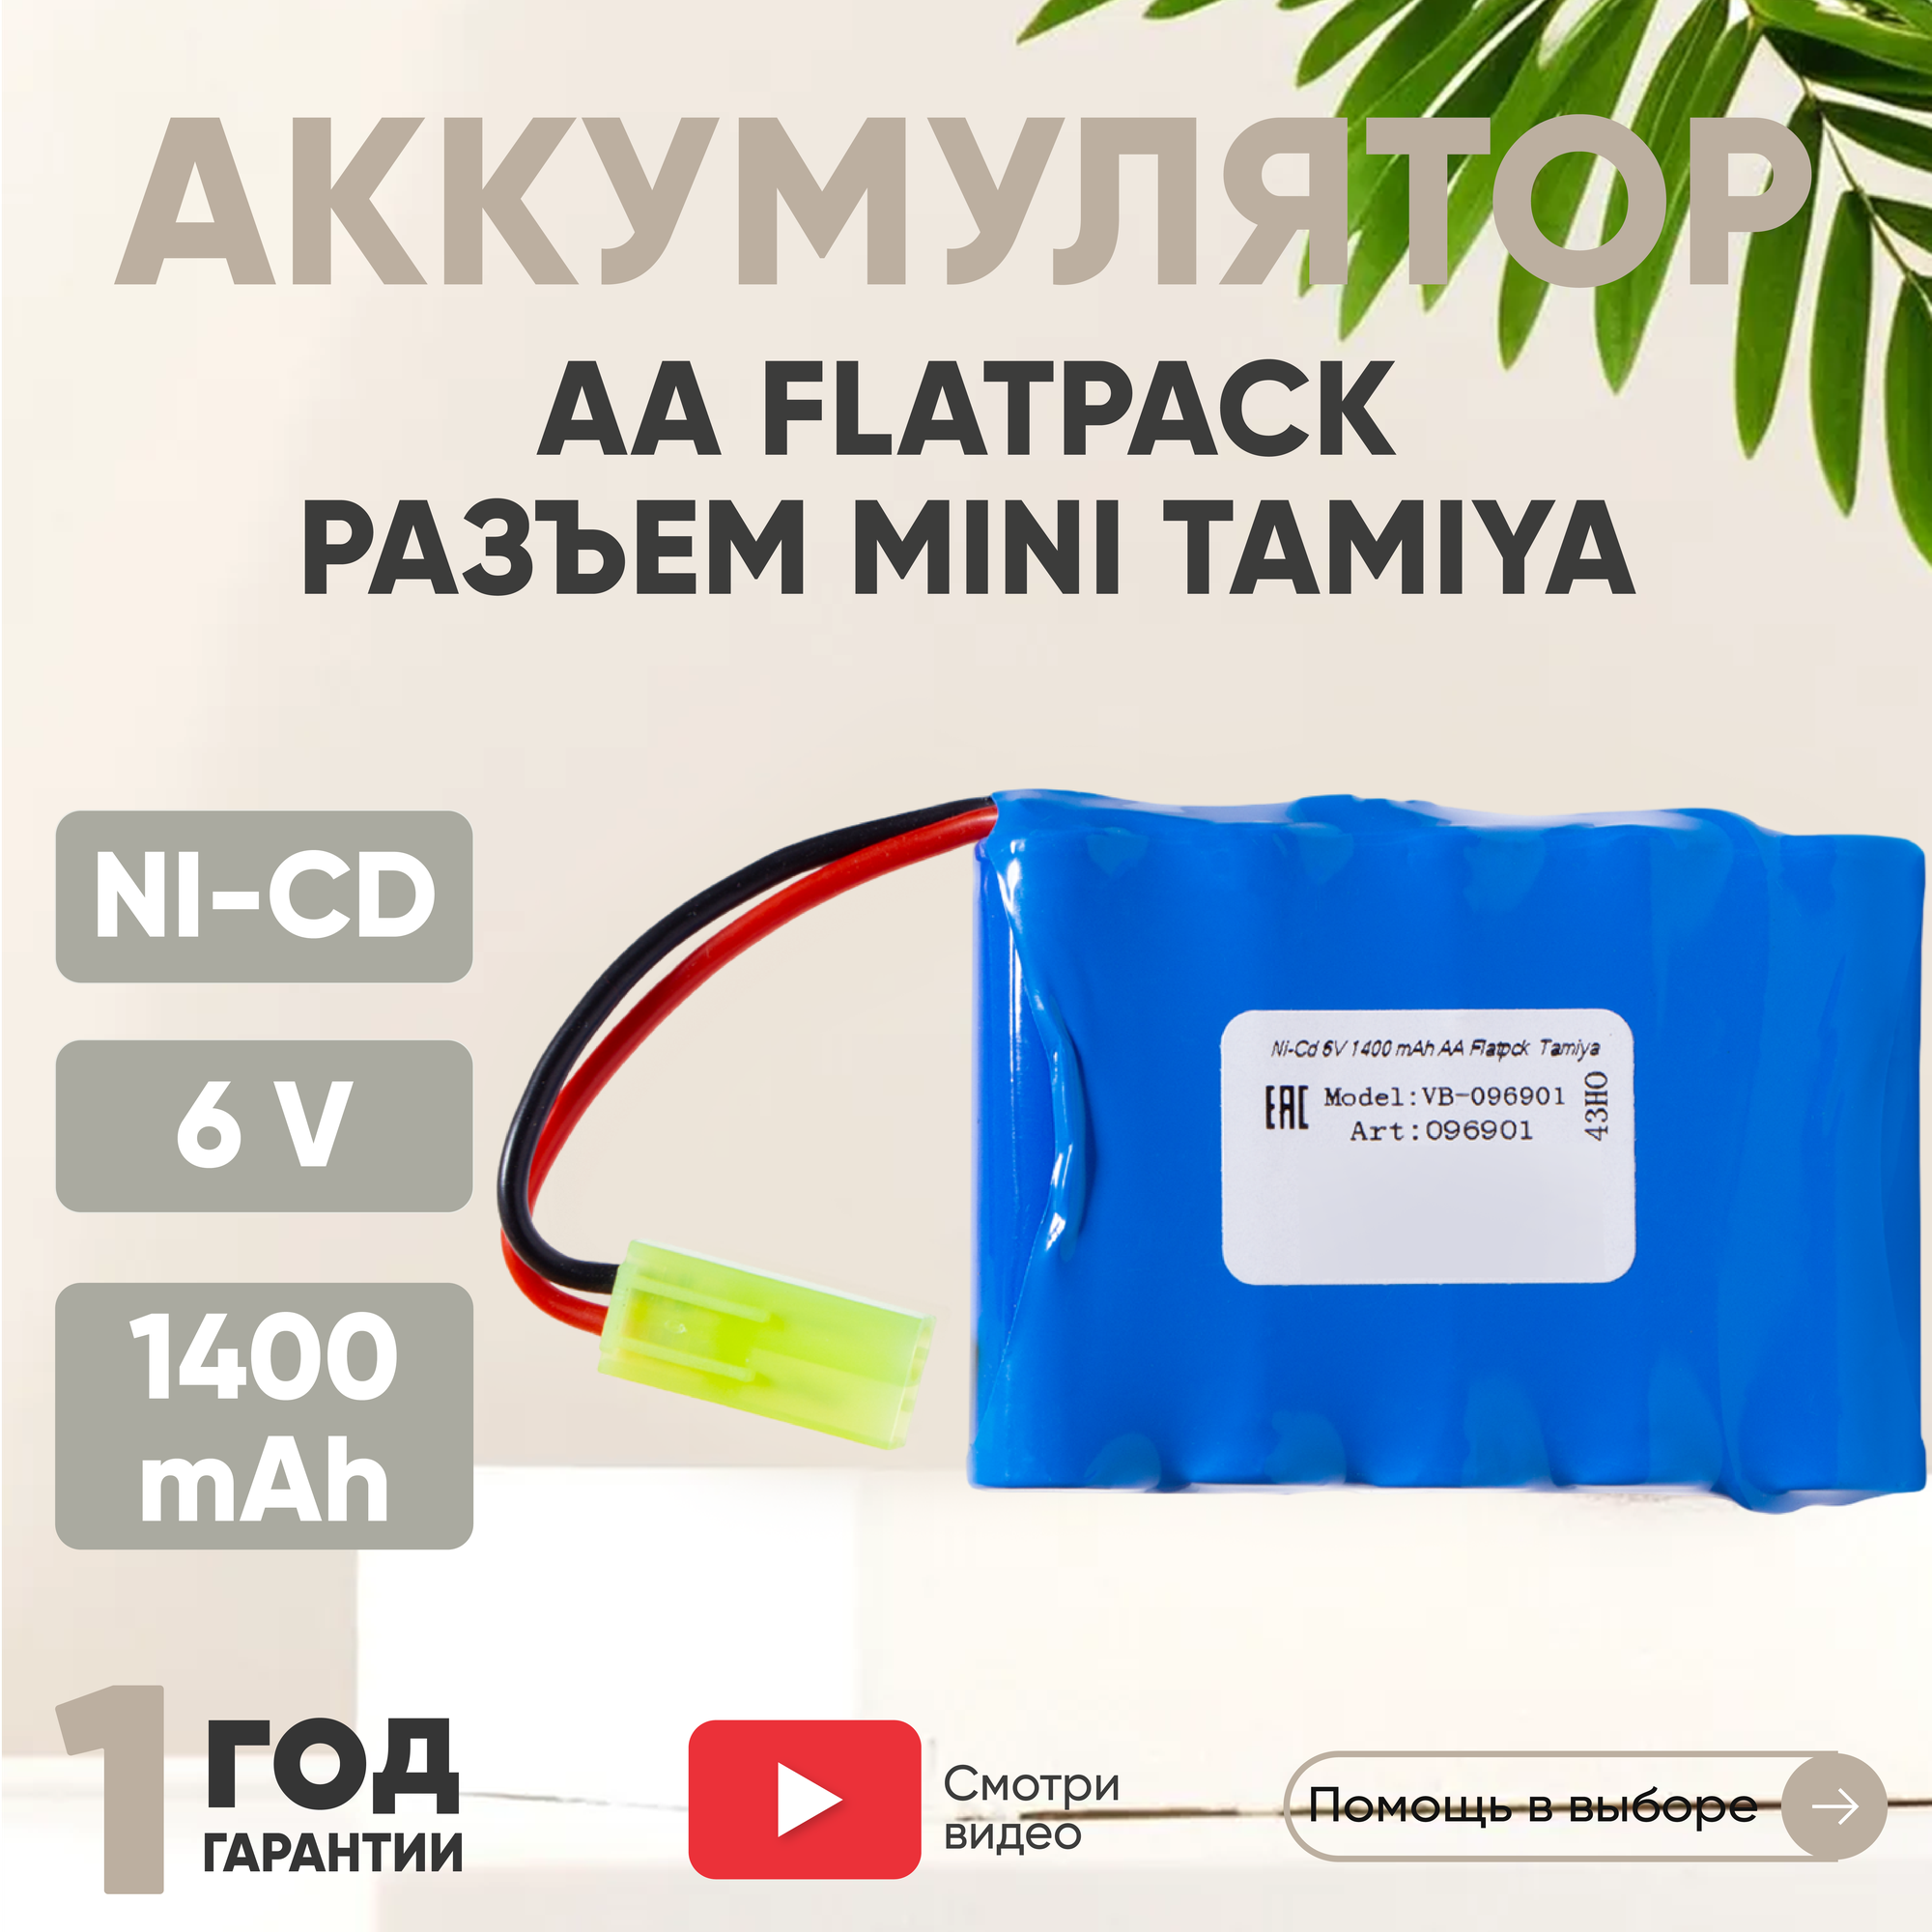 Аккумуляторная батарея (АКБ, аккумулятор) AA Flatpck, разъем Tamiya, 1400мАч, 6В, Ni-Cd